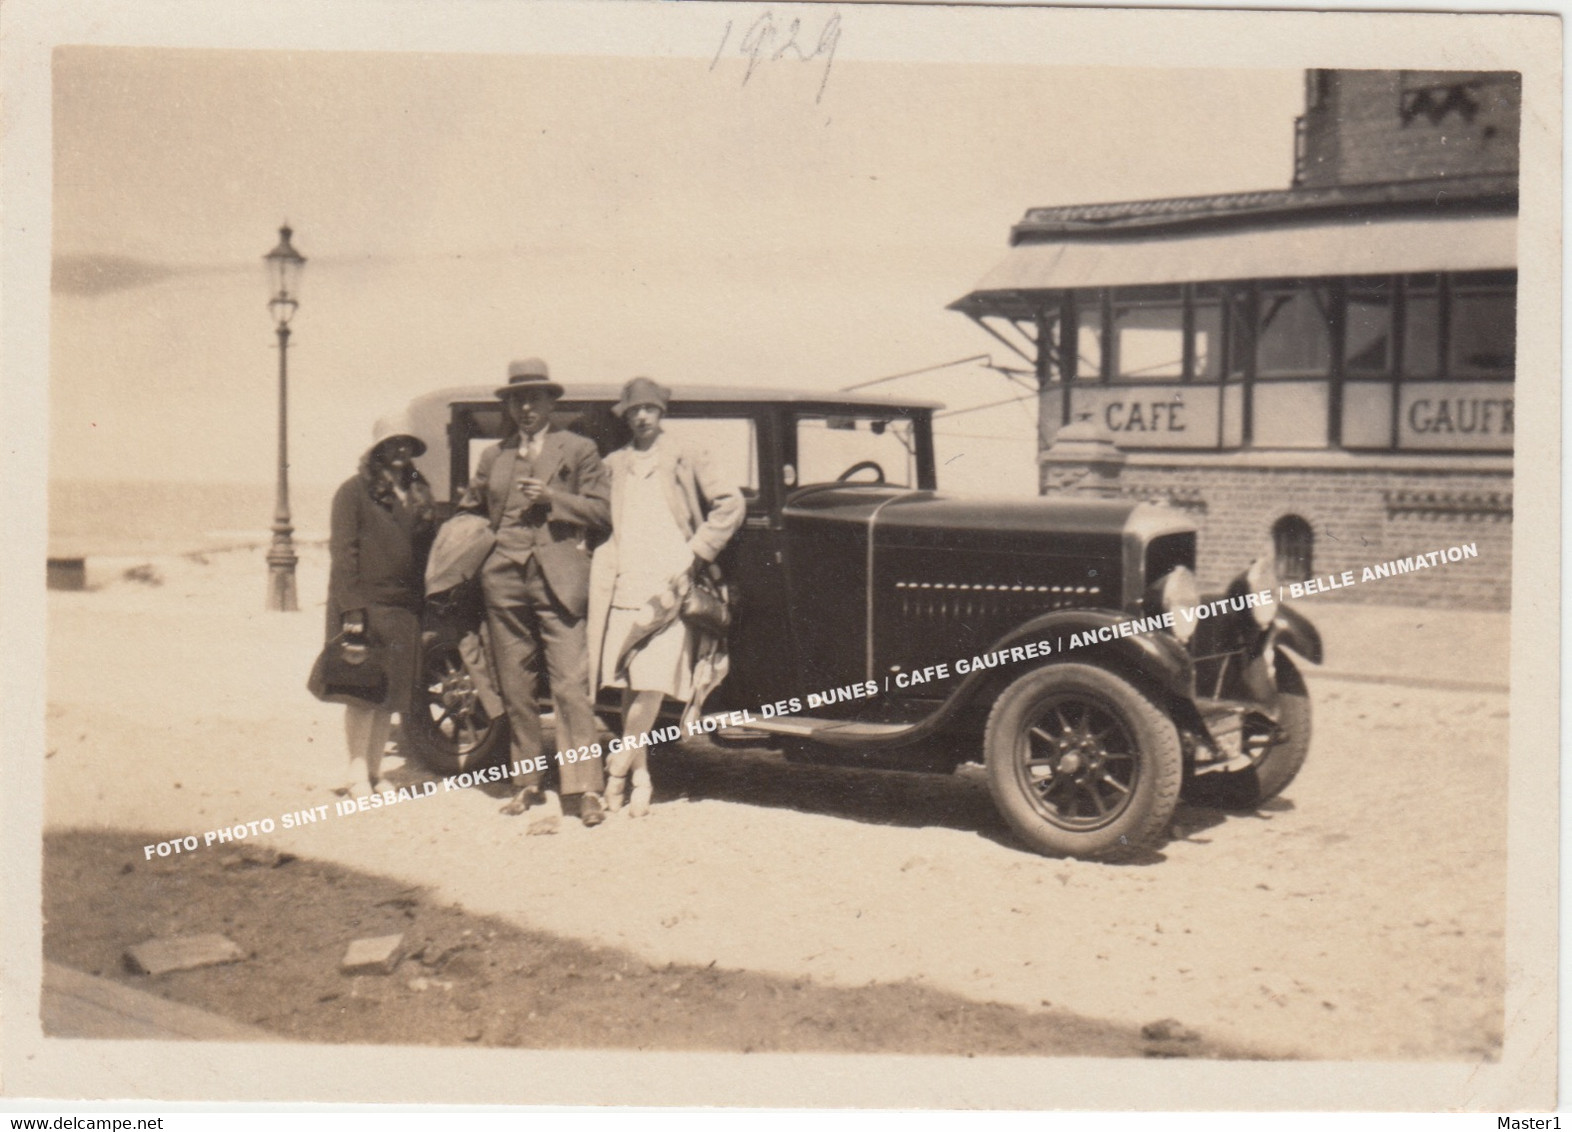 FOTO PHOTO SINT IDESBALD KOKSIJDE 1929 GRAND HOTEL DES DUNES / CAFE GAUFRES / ANCIENNE VOITURE / BELLE ANIMATION - Koksijde